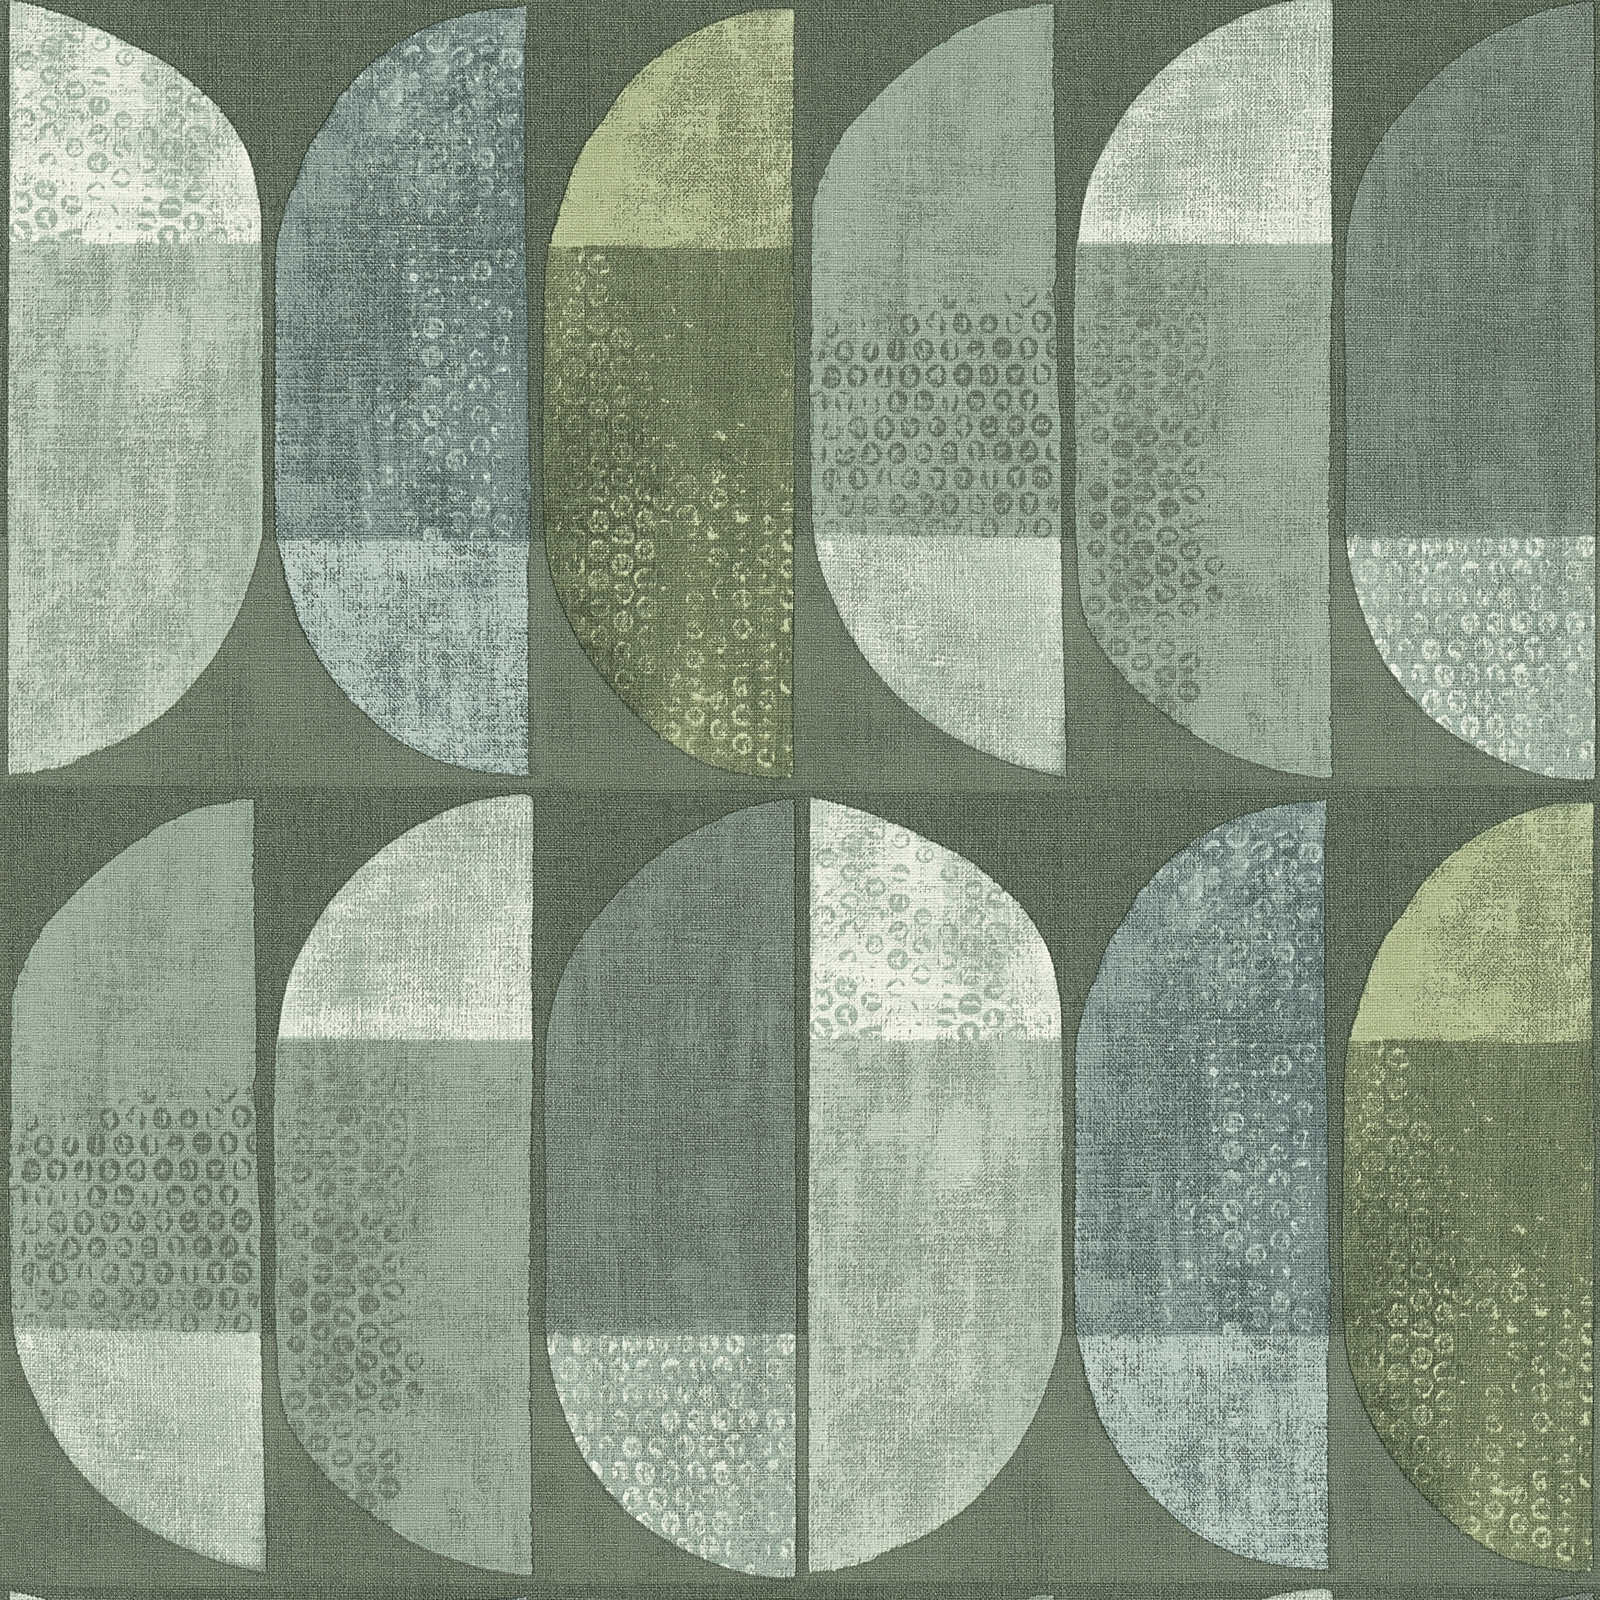             Tapete geometrisches Retro-Muster, Scandinavian Style - Grün
        